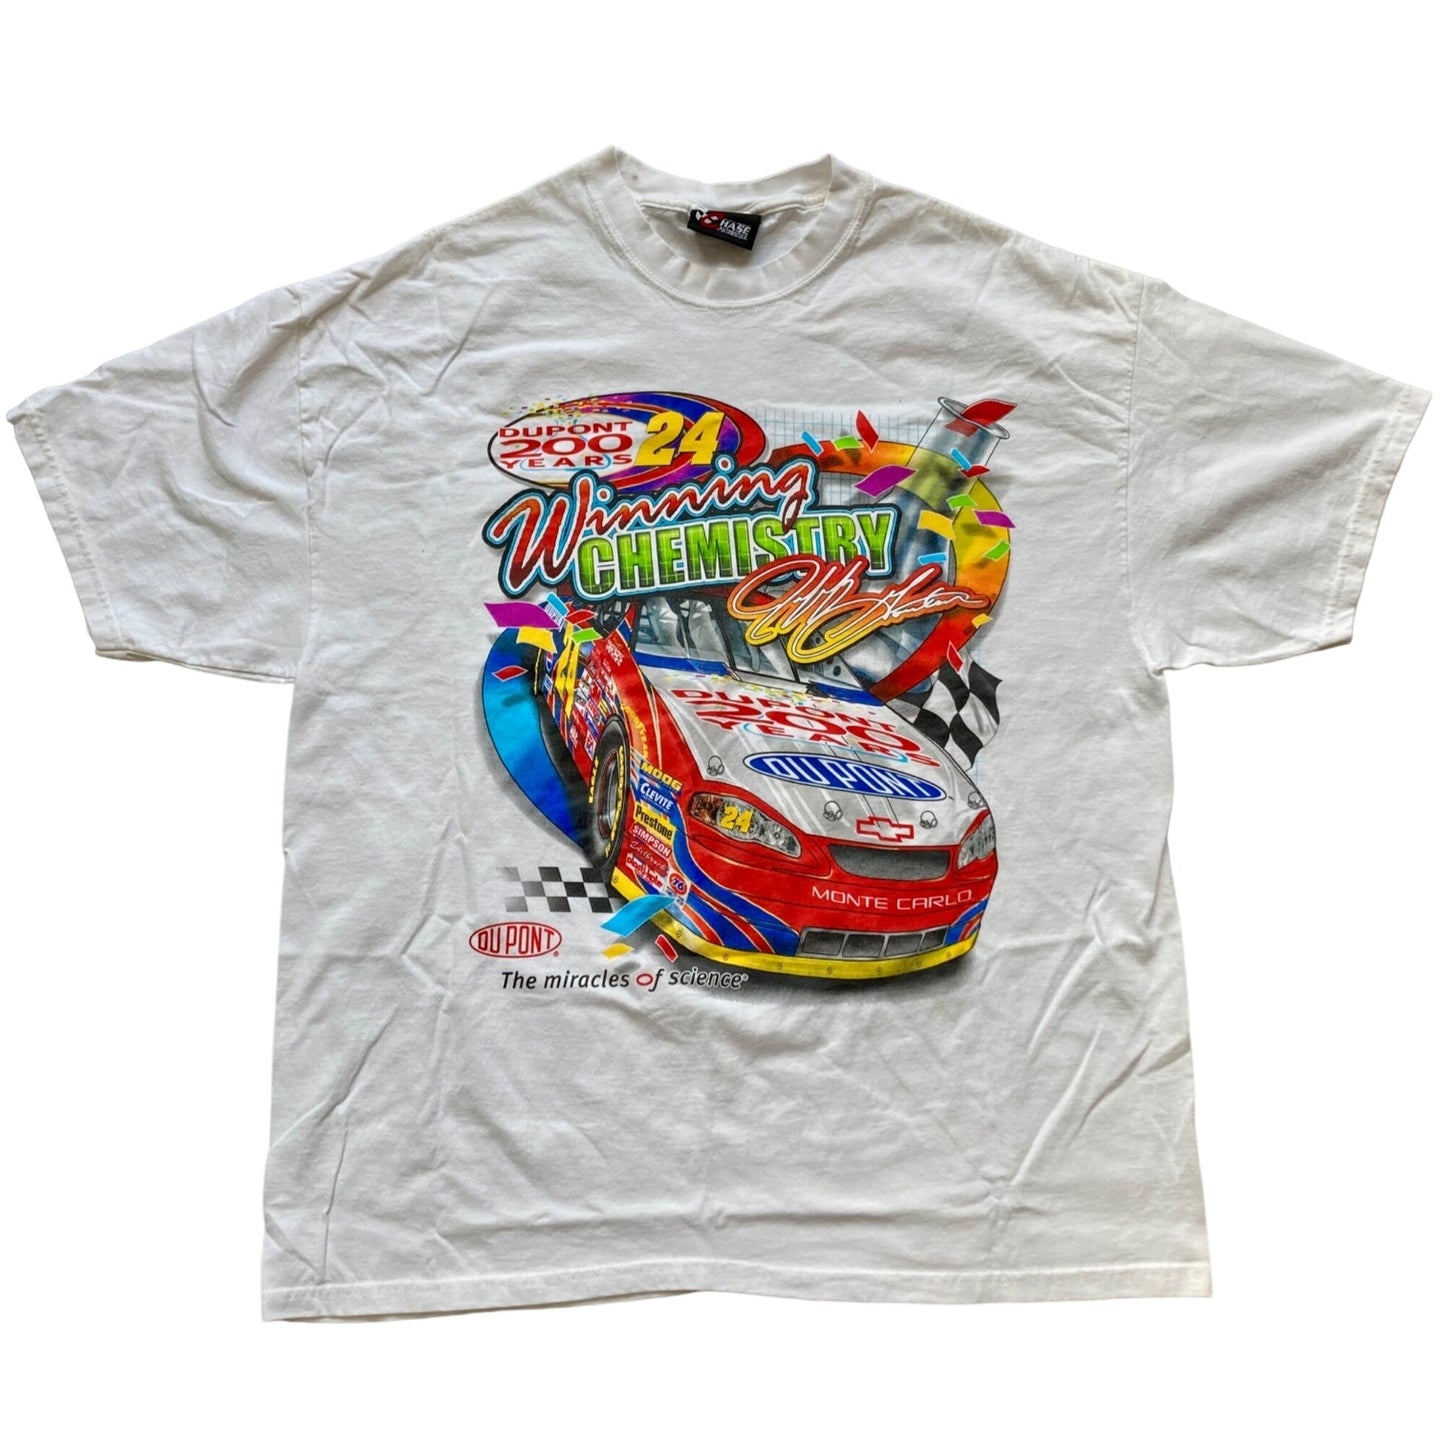 Vintage NASCAR Jeff Gordon #24 Dupont 200 Years T-Shirt Winning Chemistry Mens L